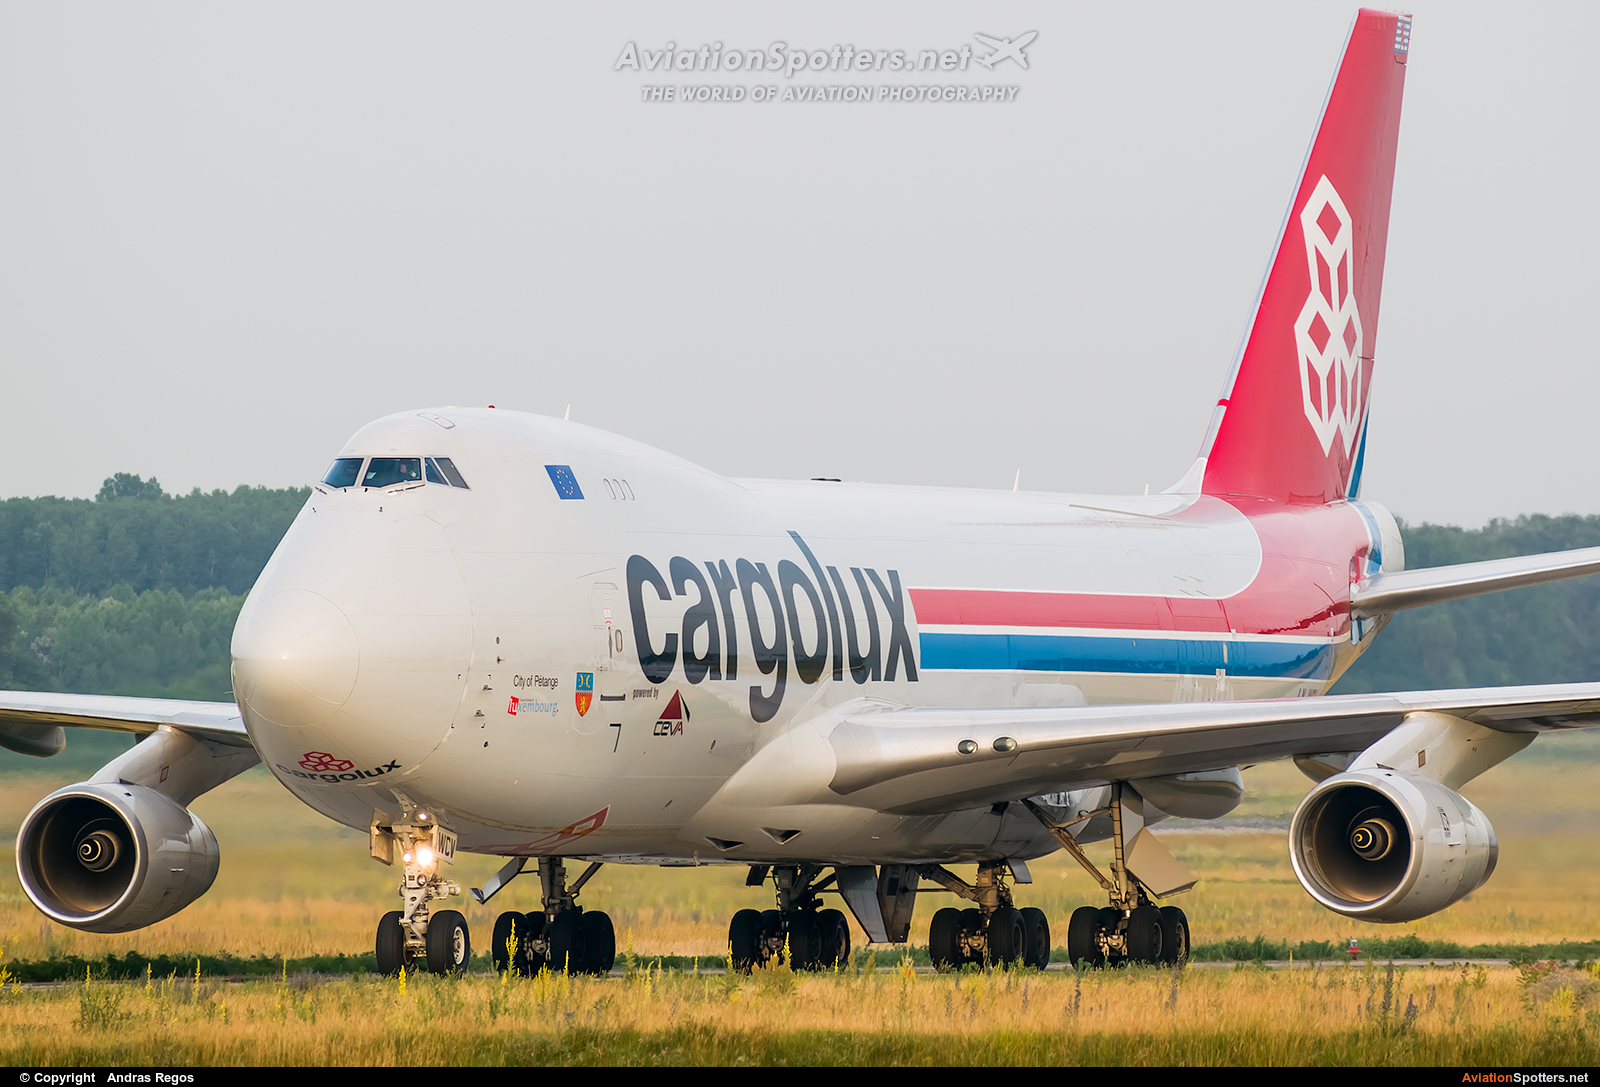 Cargolux  -  747-400F  (LX-WCV) By Andras Regos (regos)